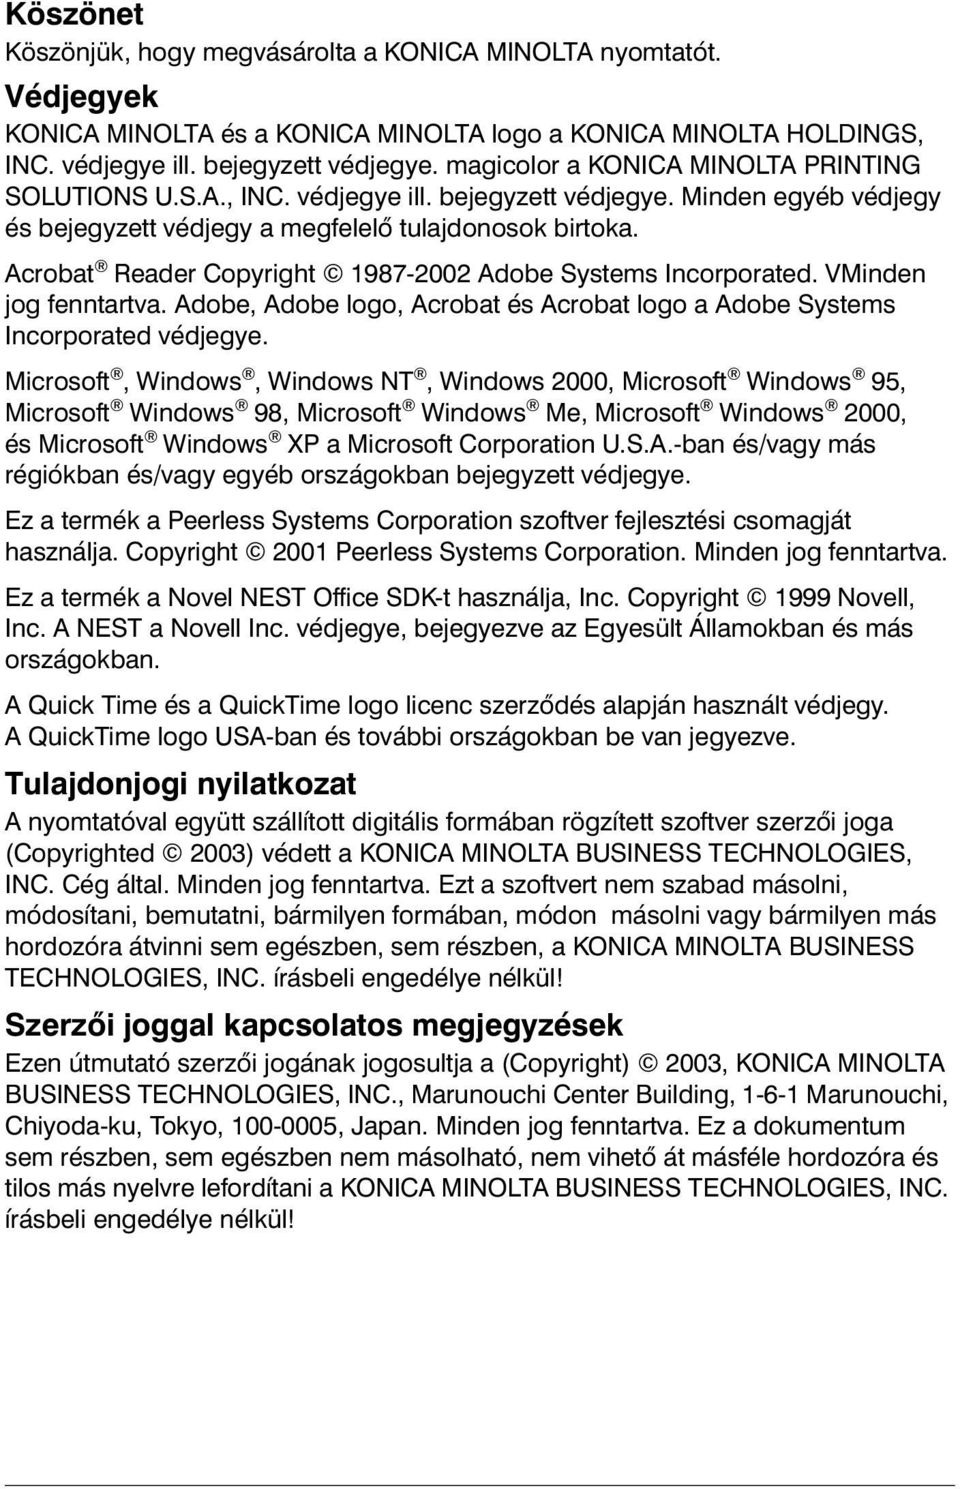 Acrobat Reader Copyright 1987-2002 Adobe Systems Incorporated. VMinden jog fenntartva. Adobe, Adobe logo, Acrobat és Acrobat logo a Adobe Systems Incorporated védjegye.